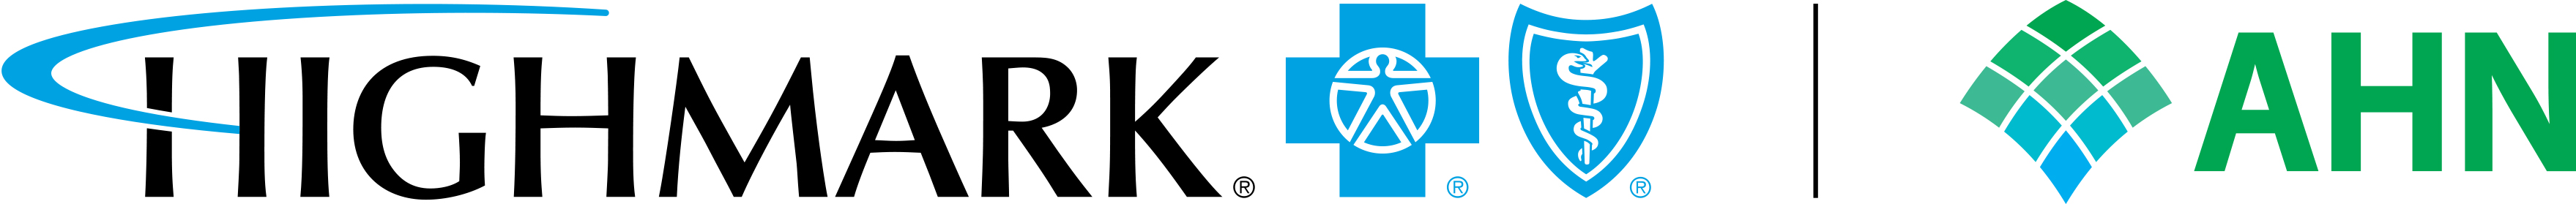 Highmark Blue Cross Blue Shield - AHN logos